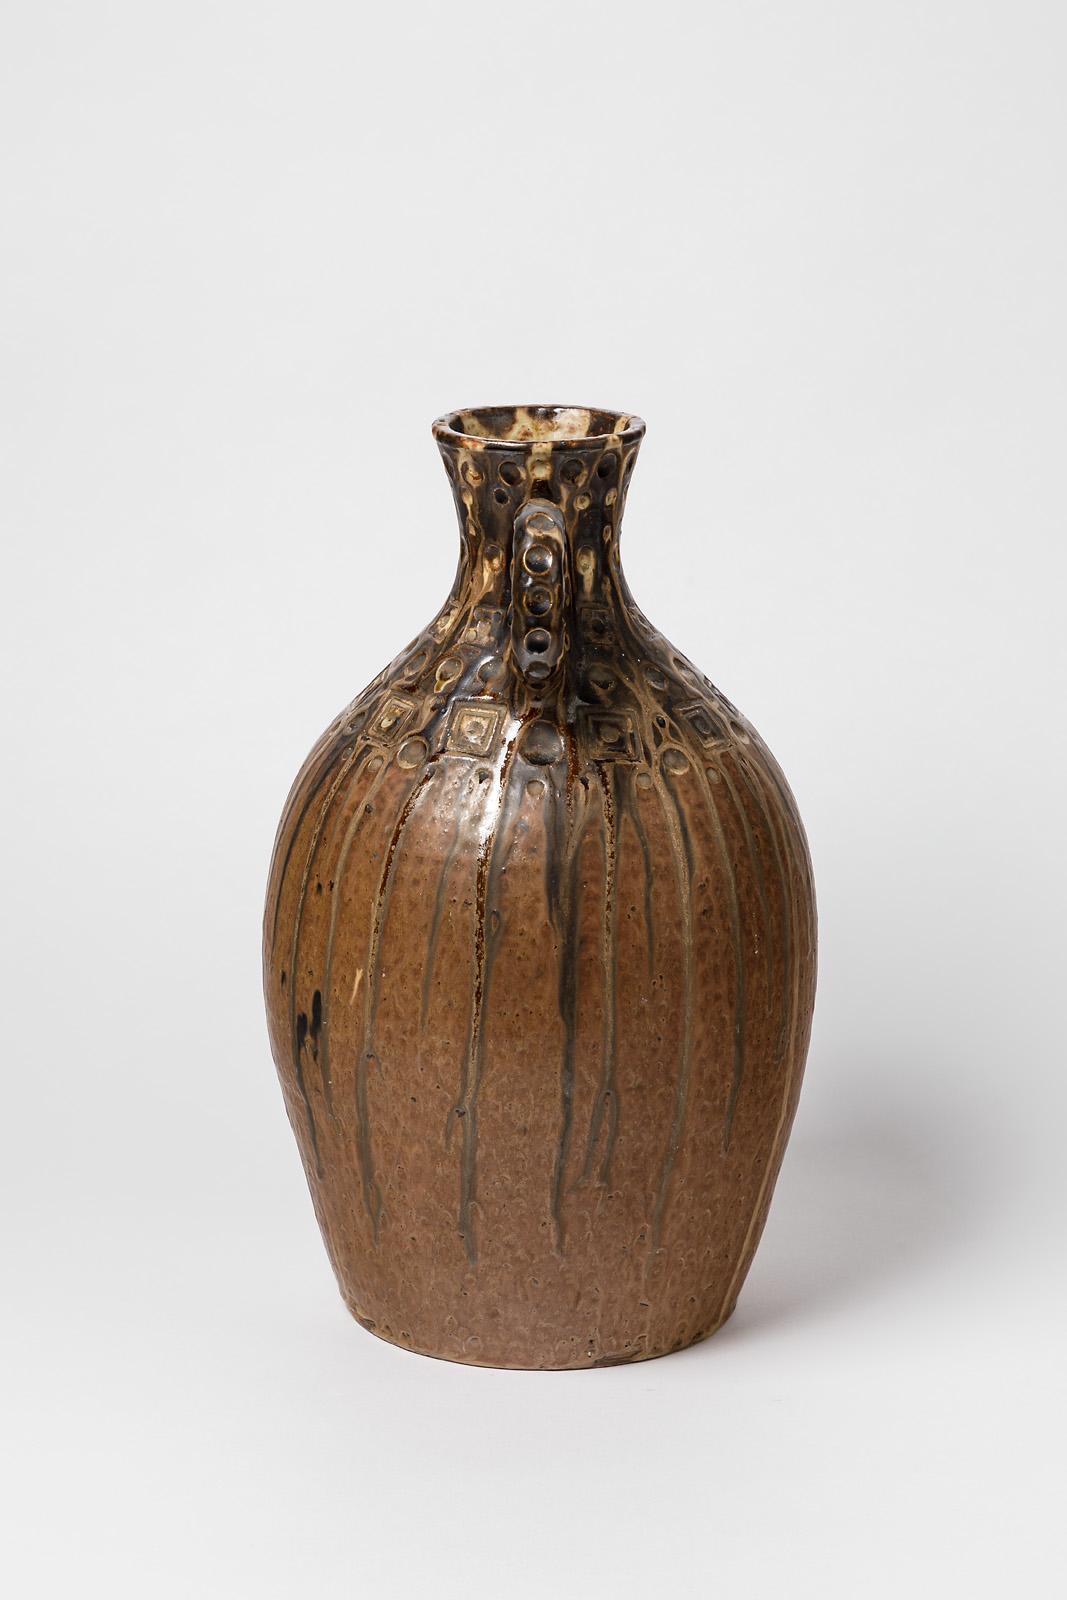 A ceramic vase by Joseph Talbot, to La Borne.
Signed under the base.
Perfect original conditions,
circa 1940.